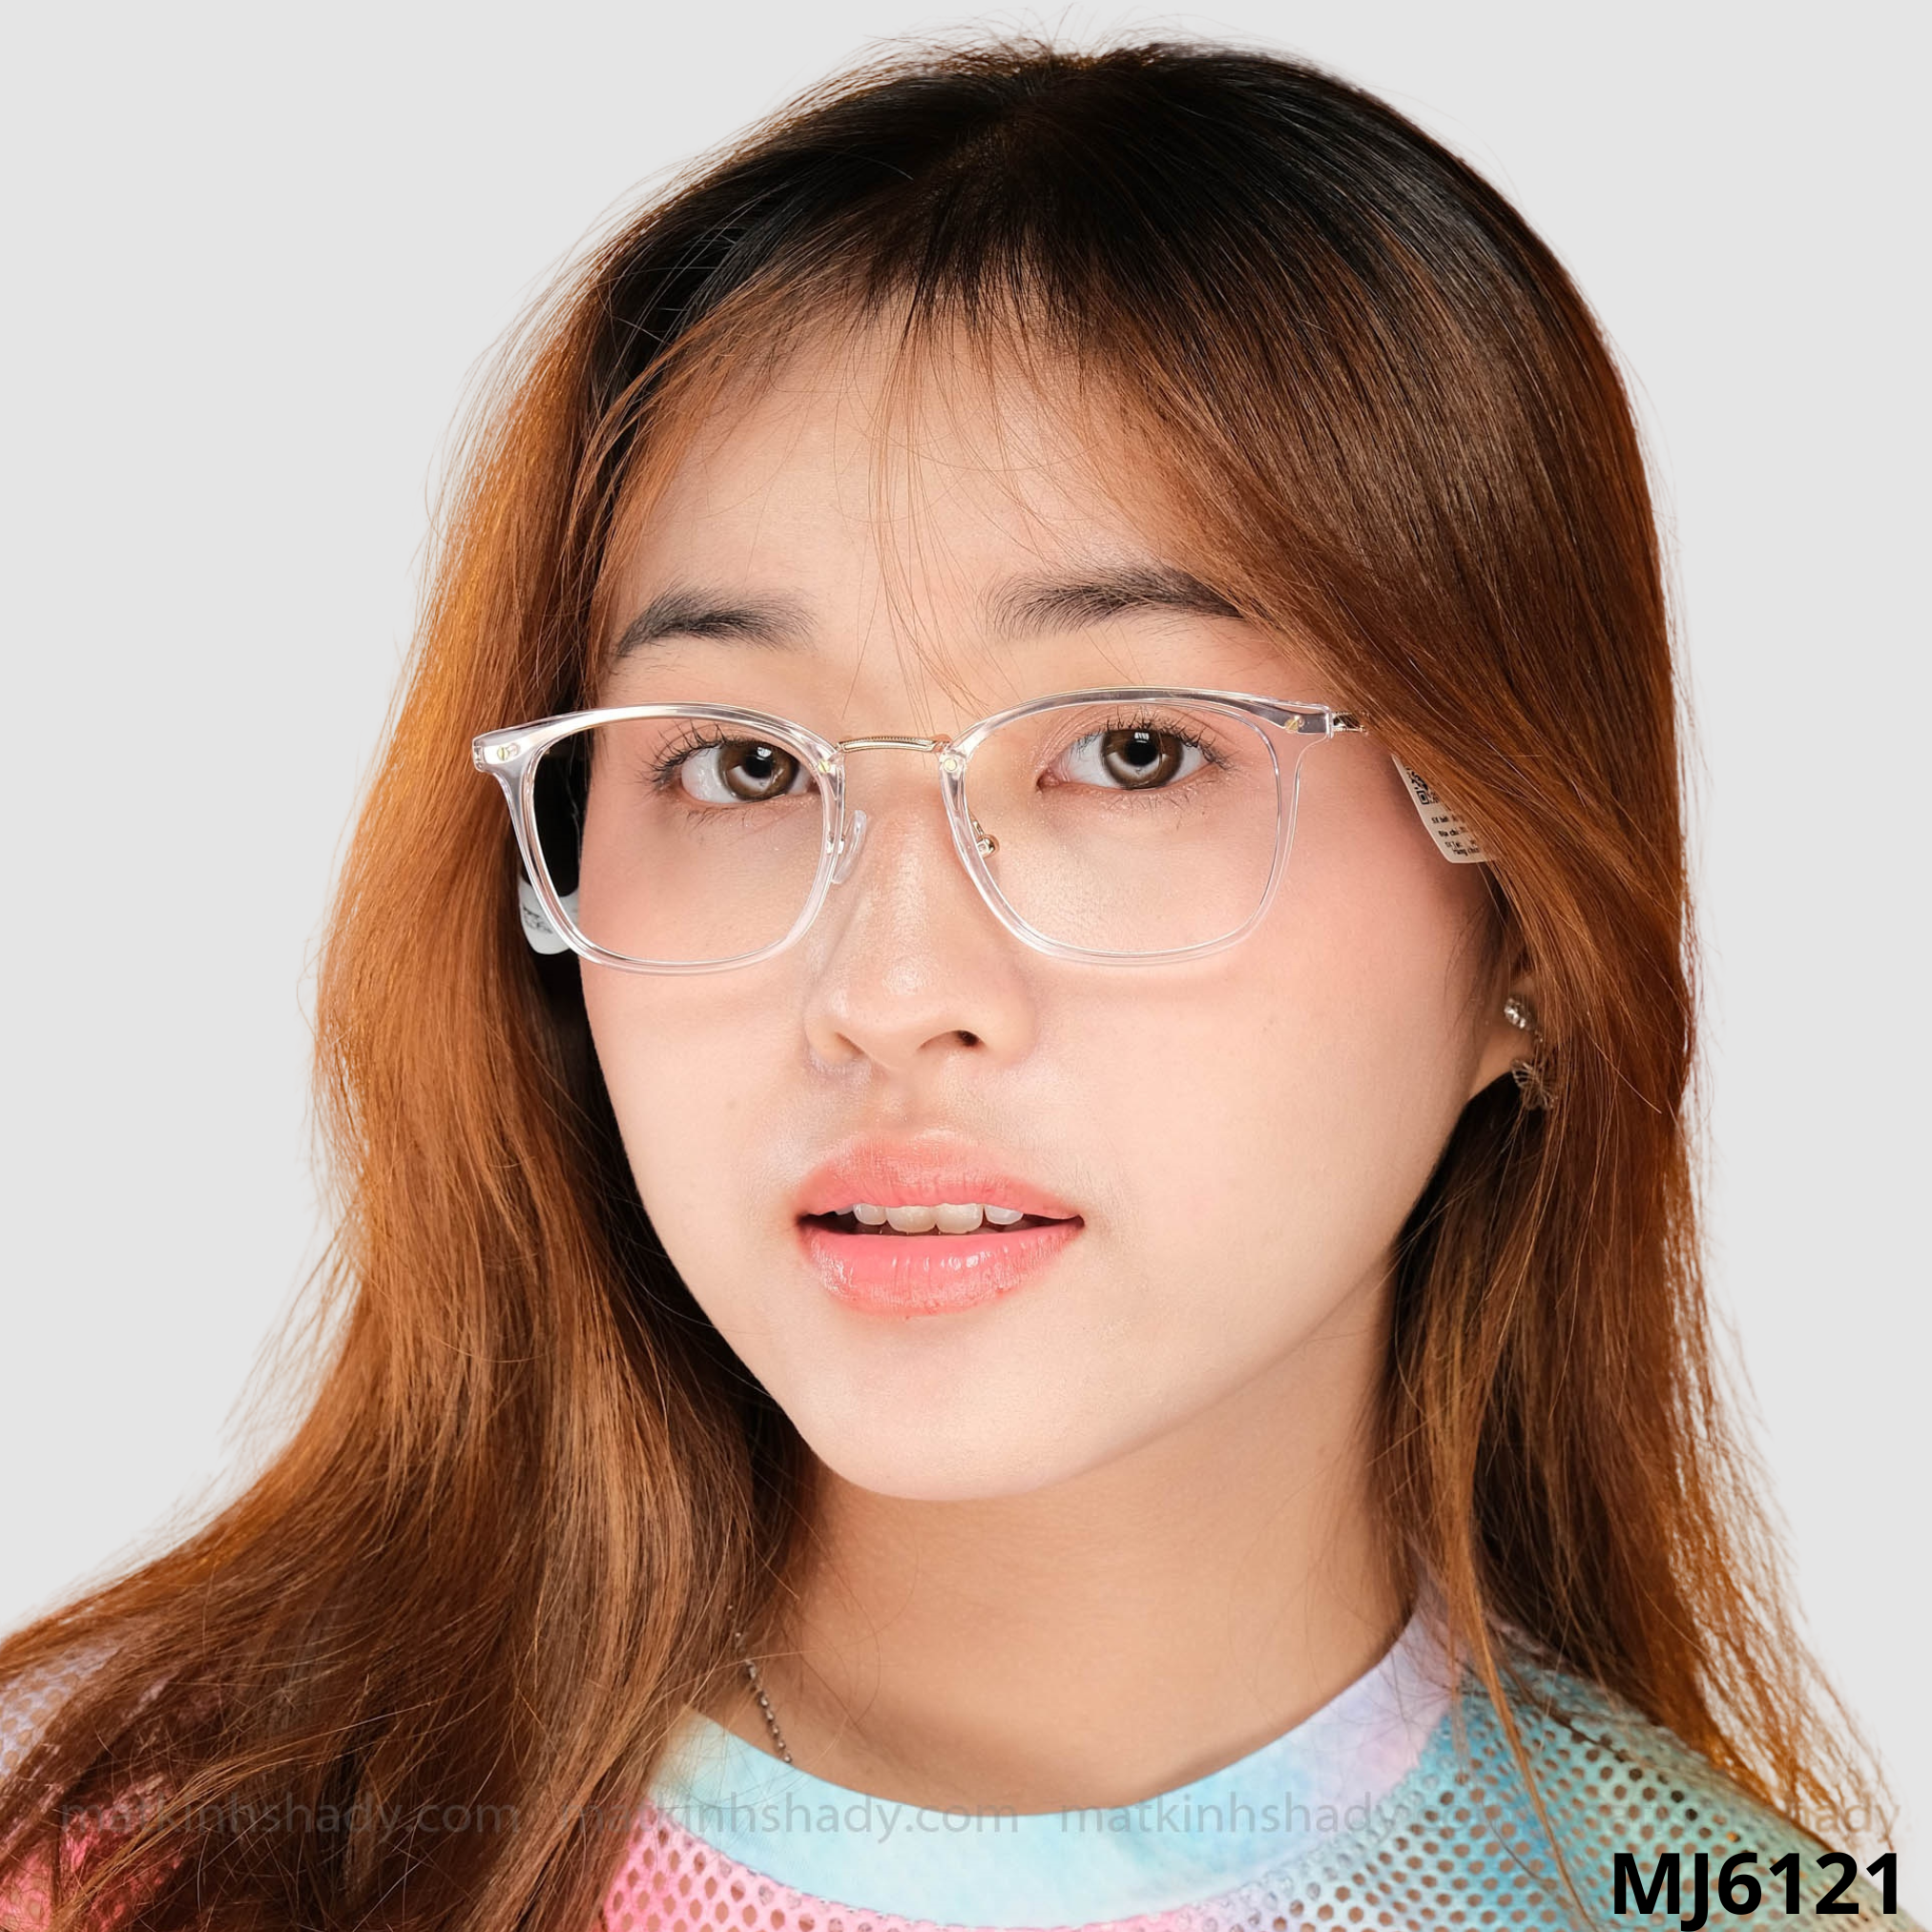  Molsion Eyewear - Glasses - MJ6121 